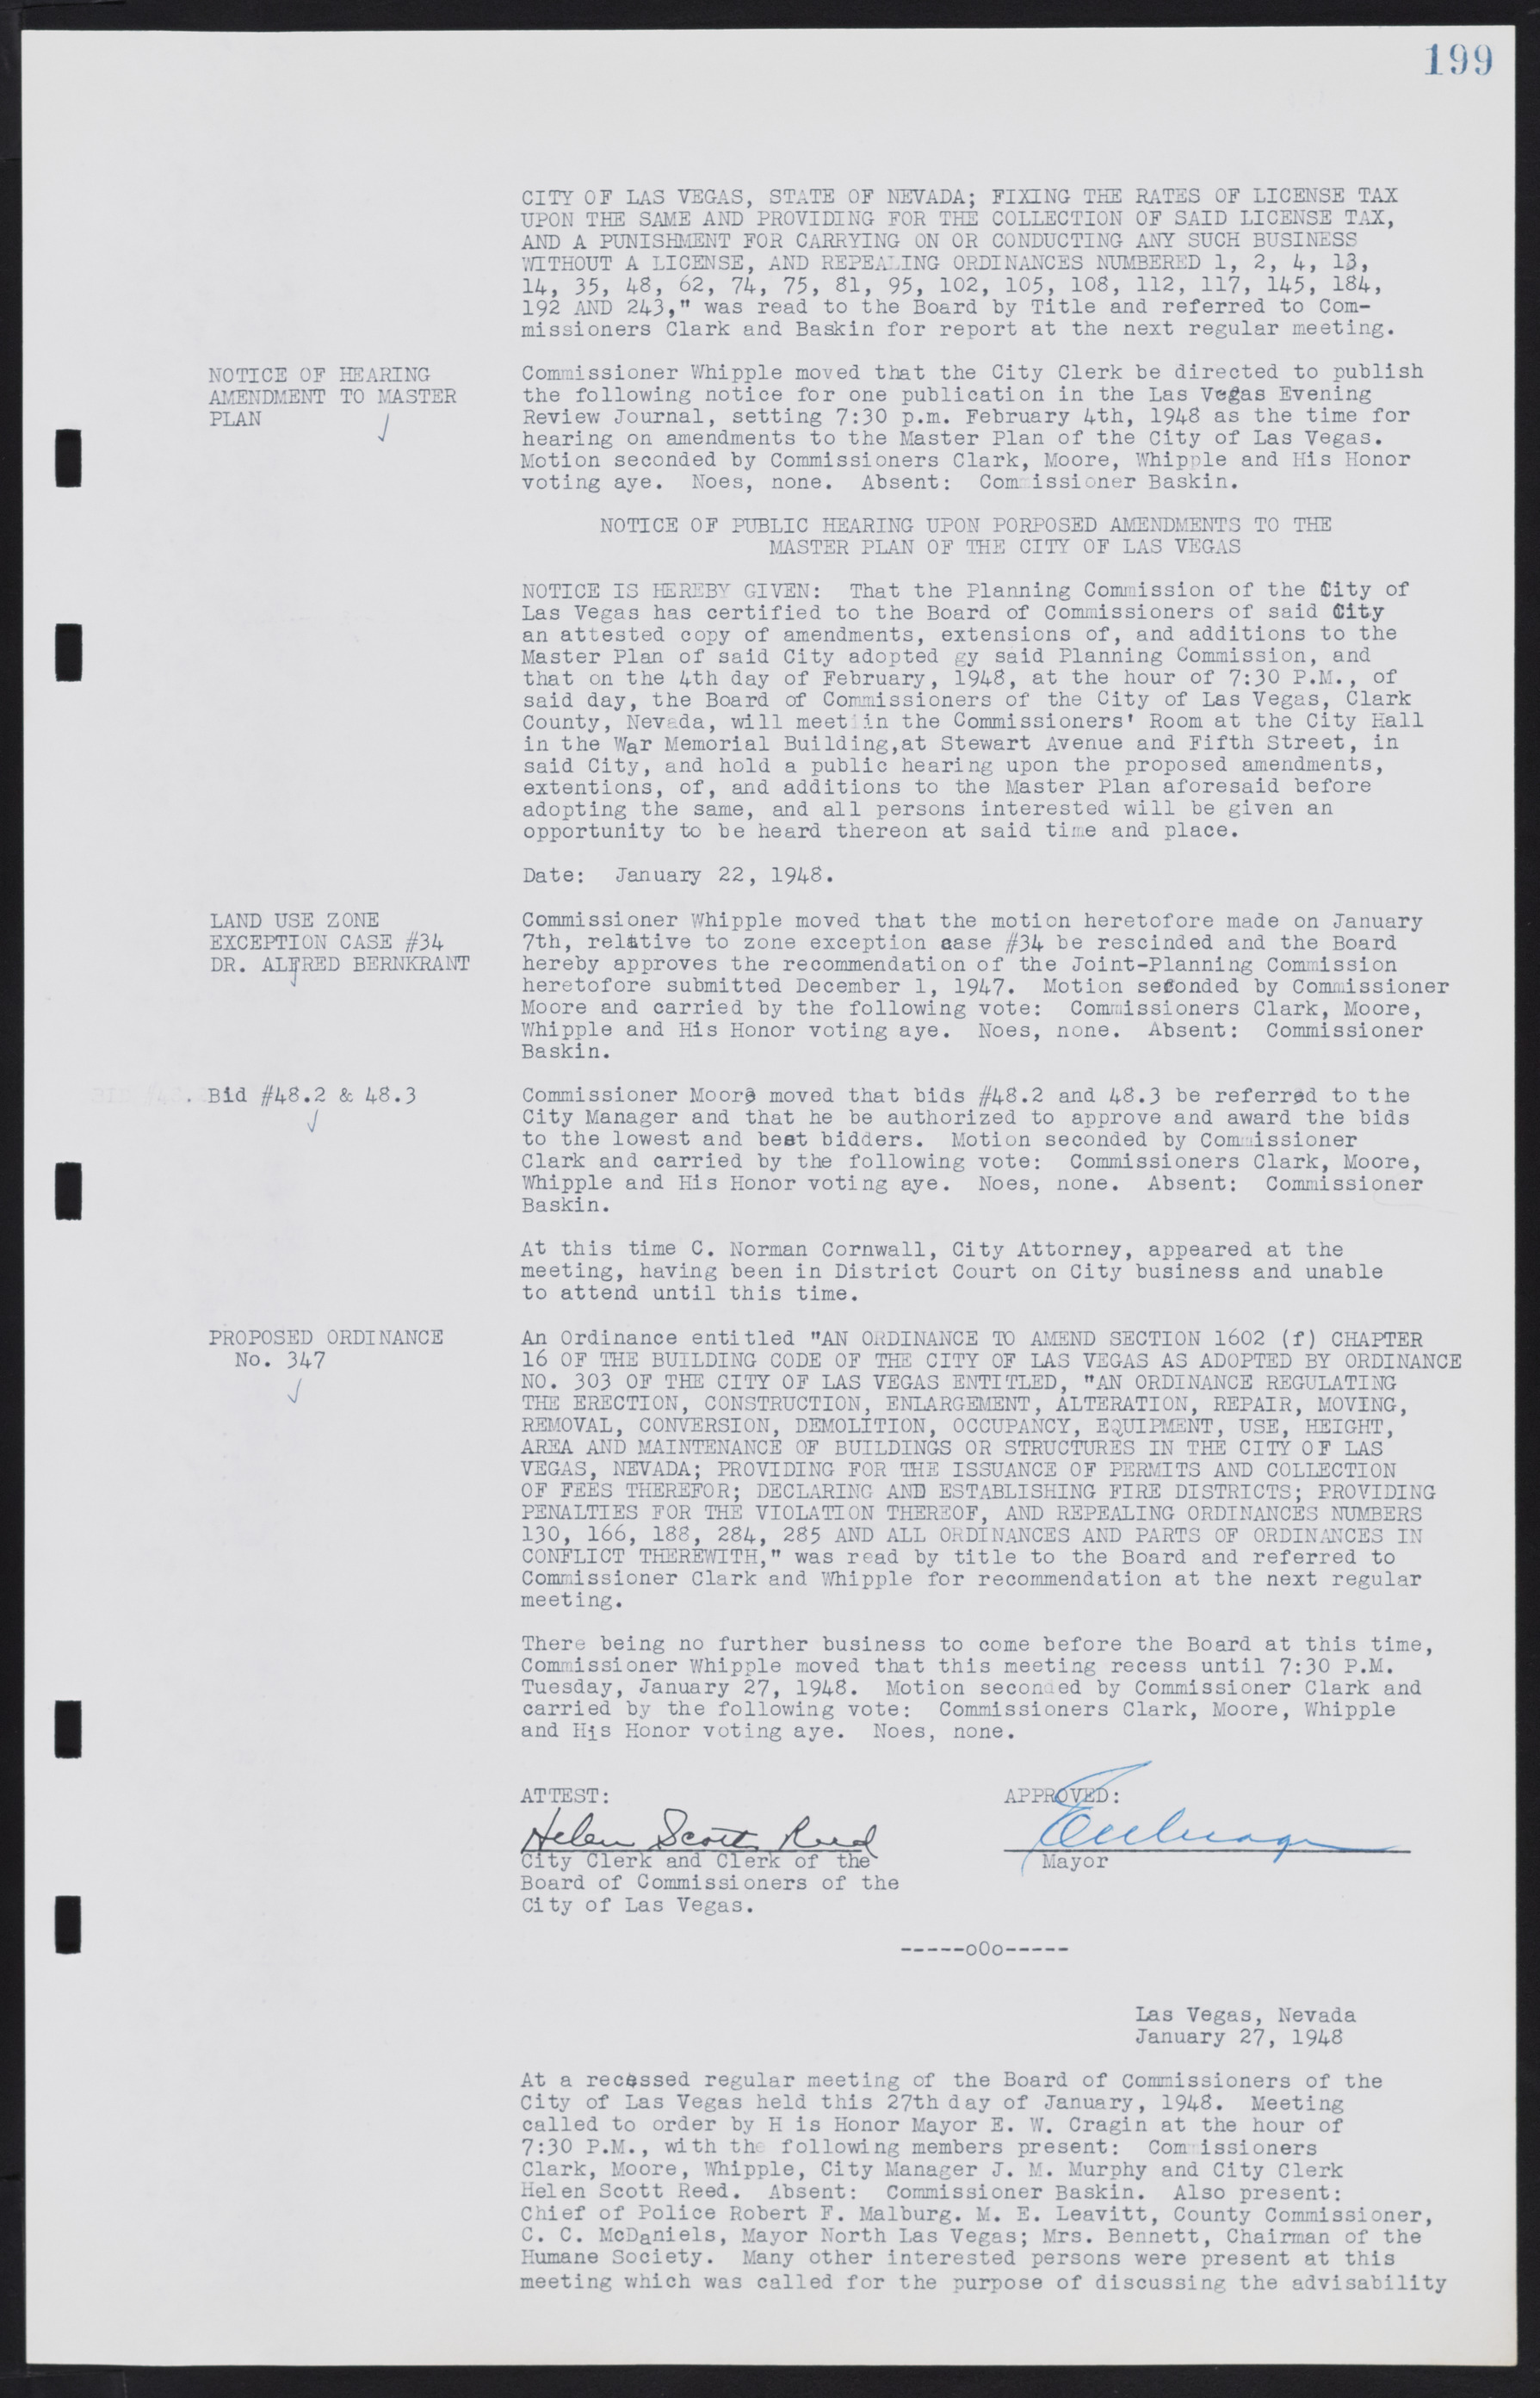 Las Vegas City Commission Minutes, January 7, 1947 to October 26, 1949, lvc000006-221